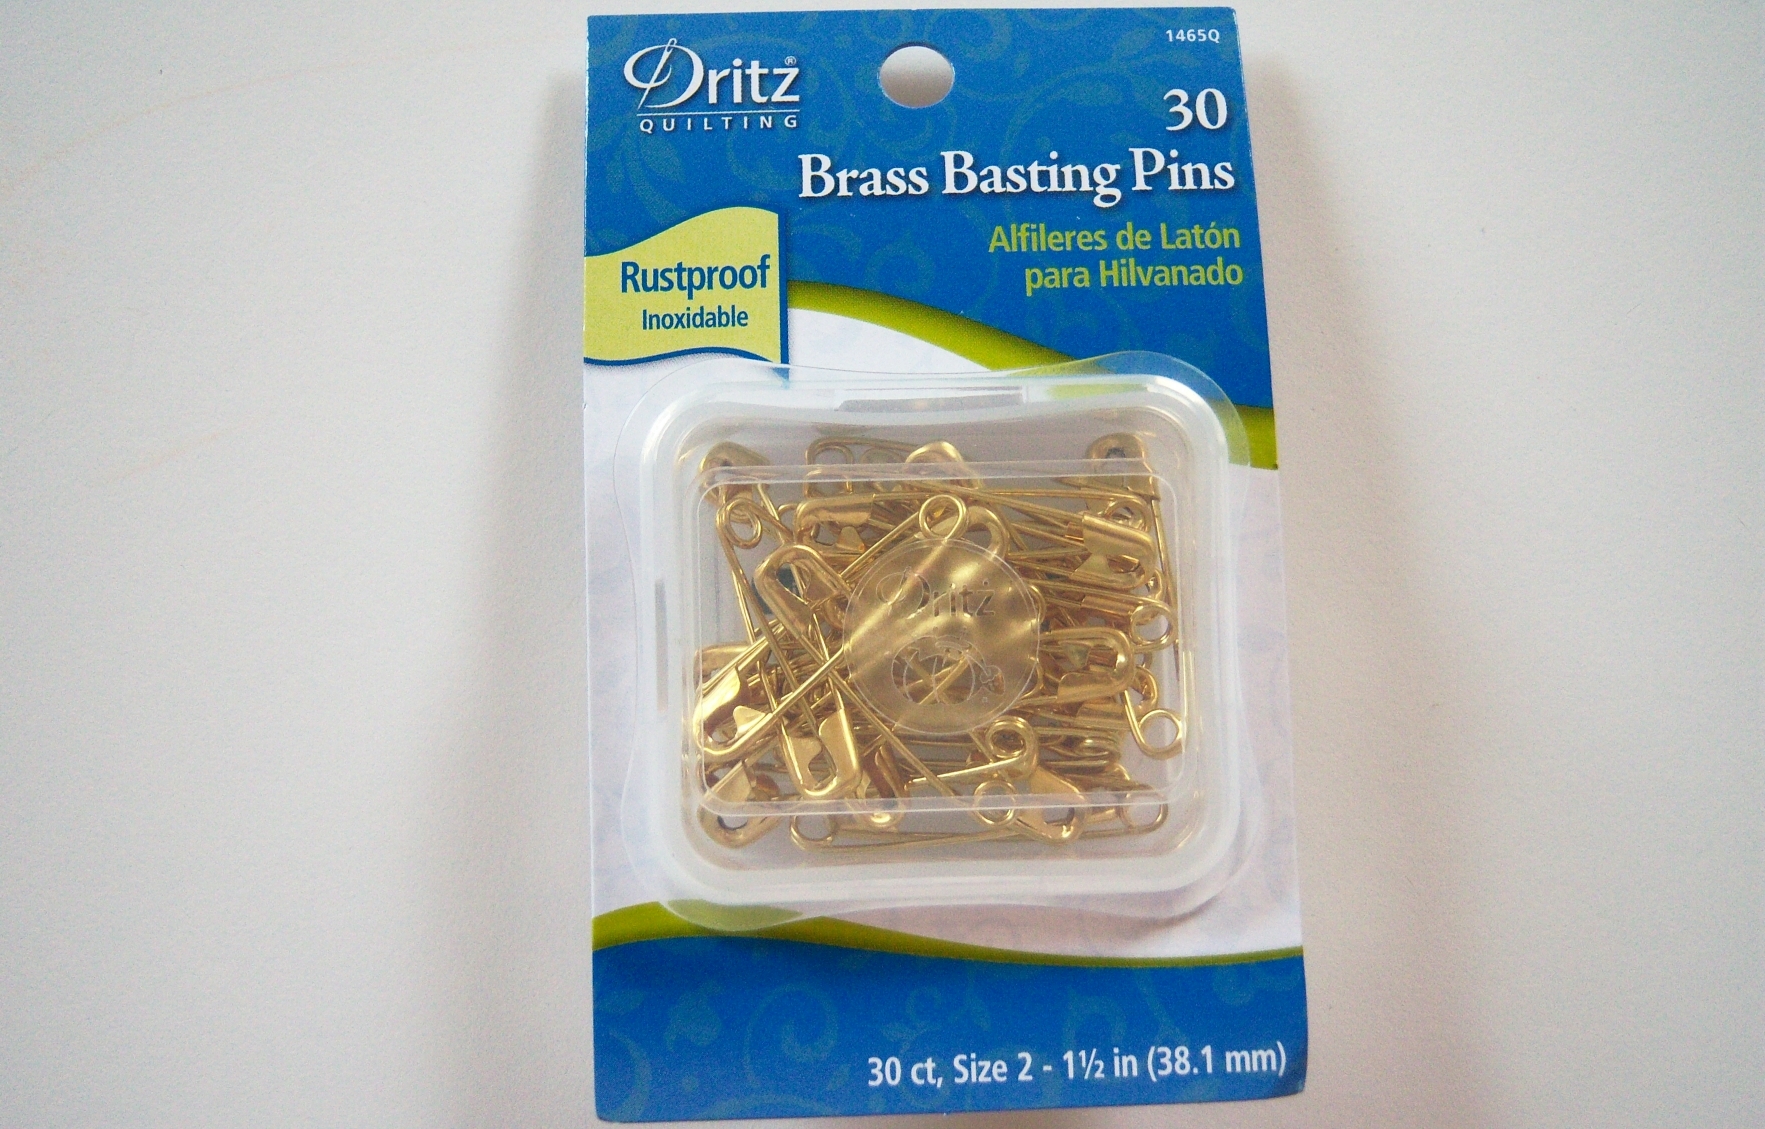 1465Q Quilting Brass Basting Pins